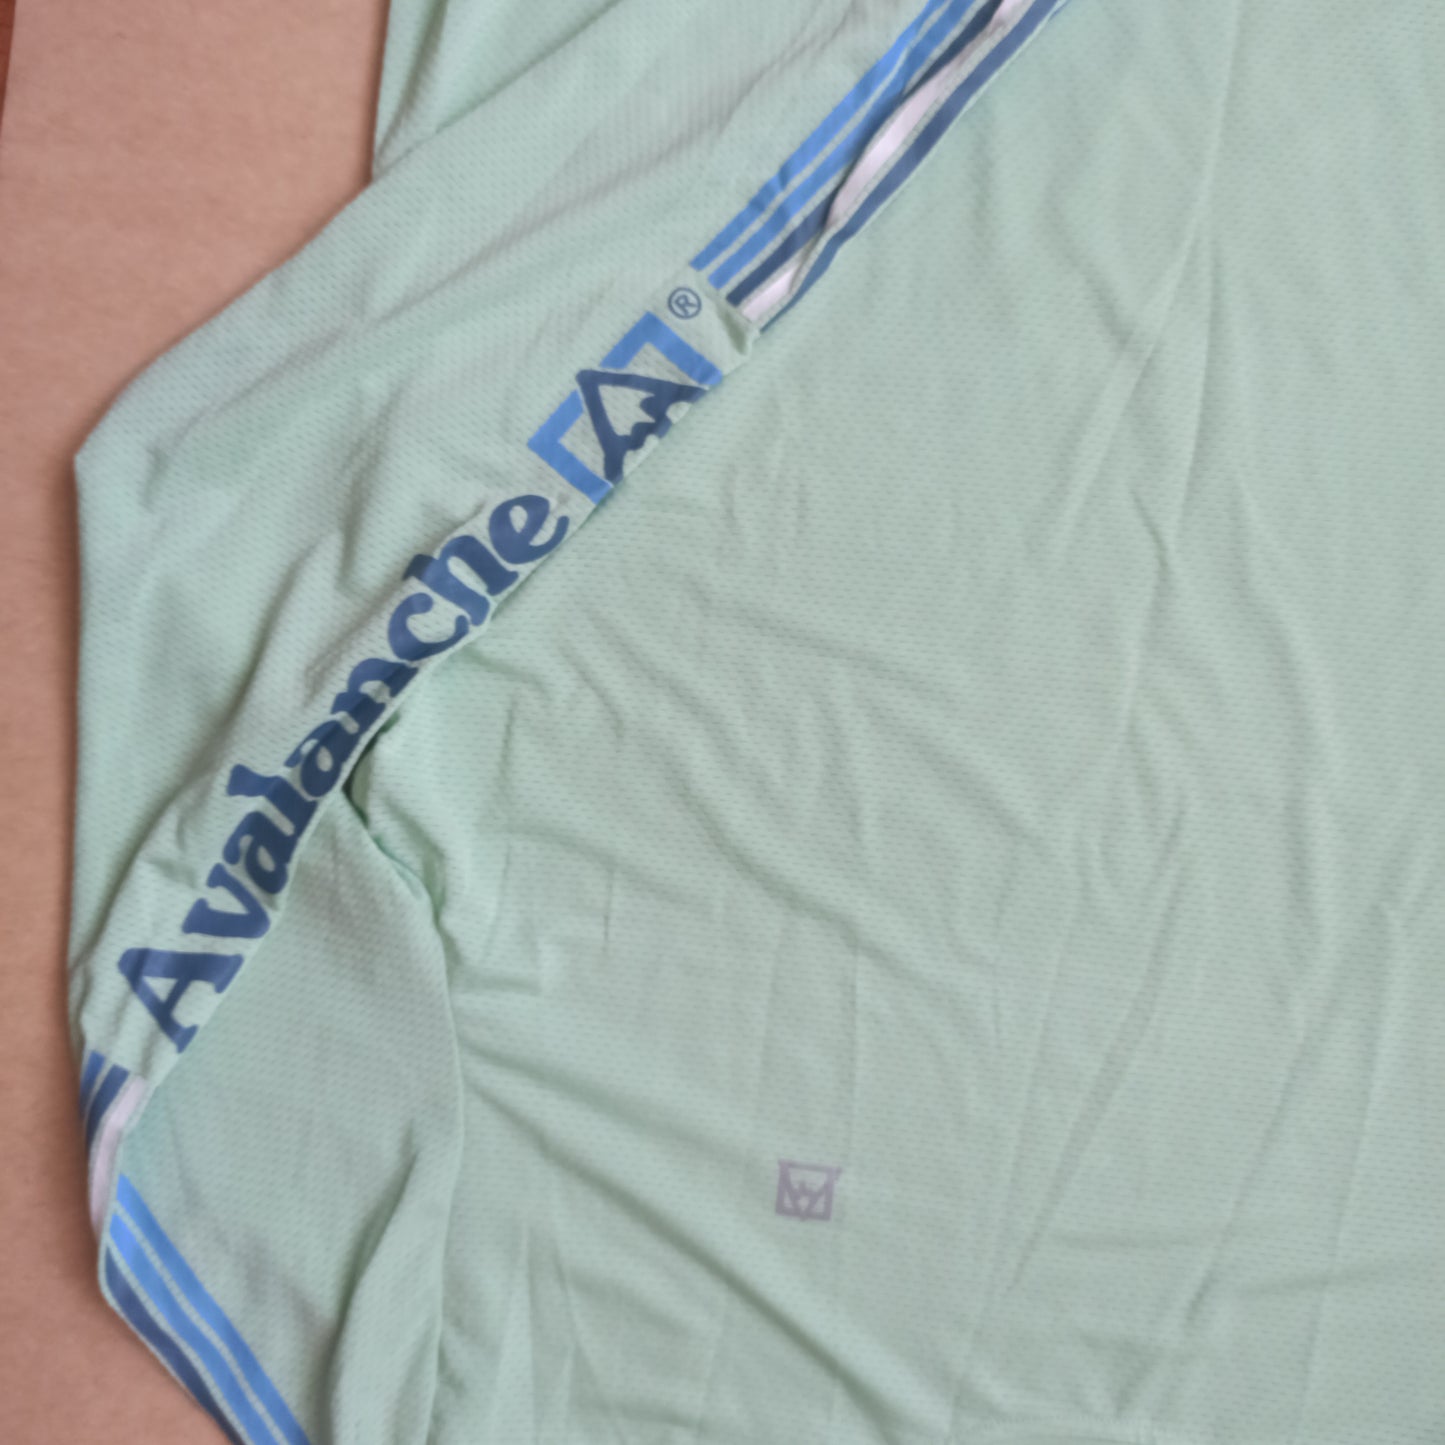 Camisa Manga larga Acalanche -Talla M - Nuevo